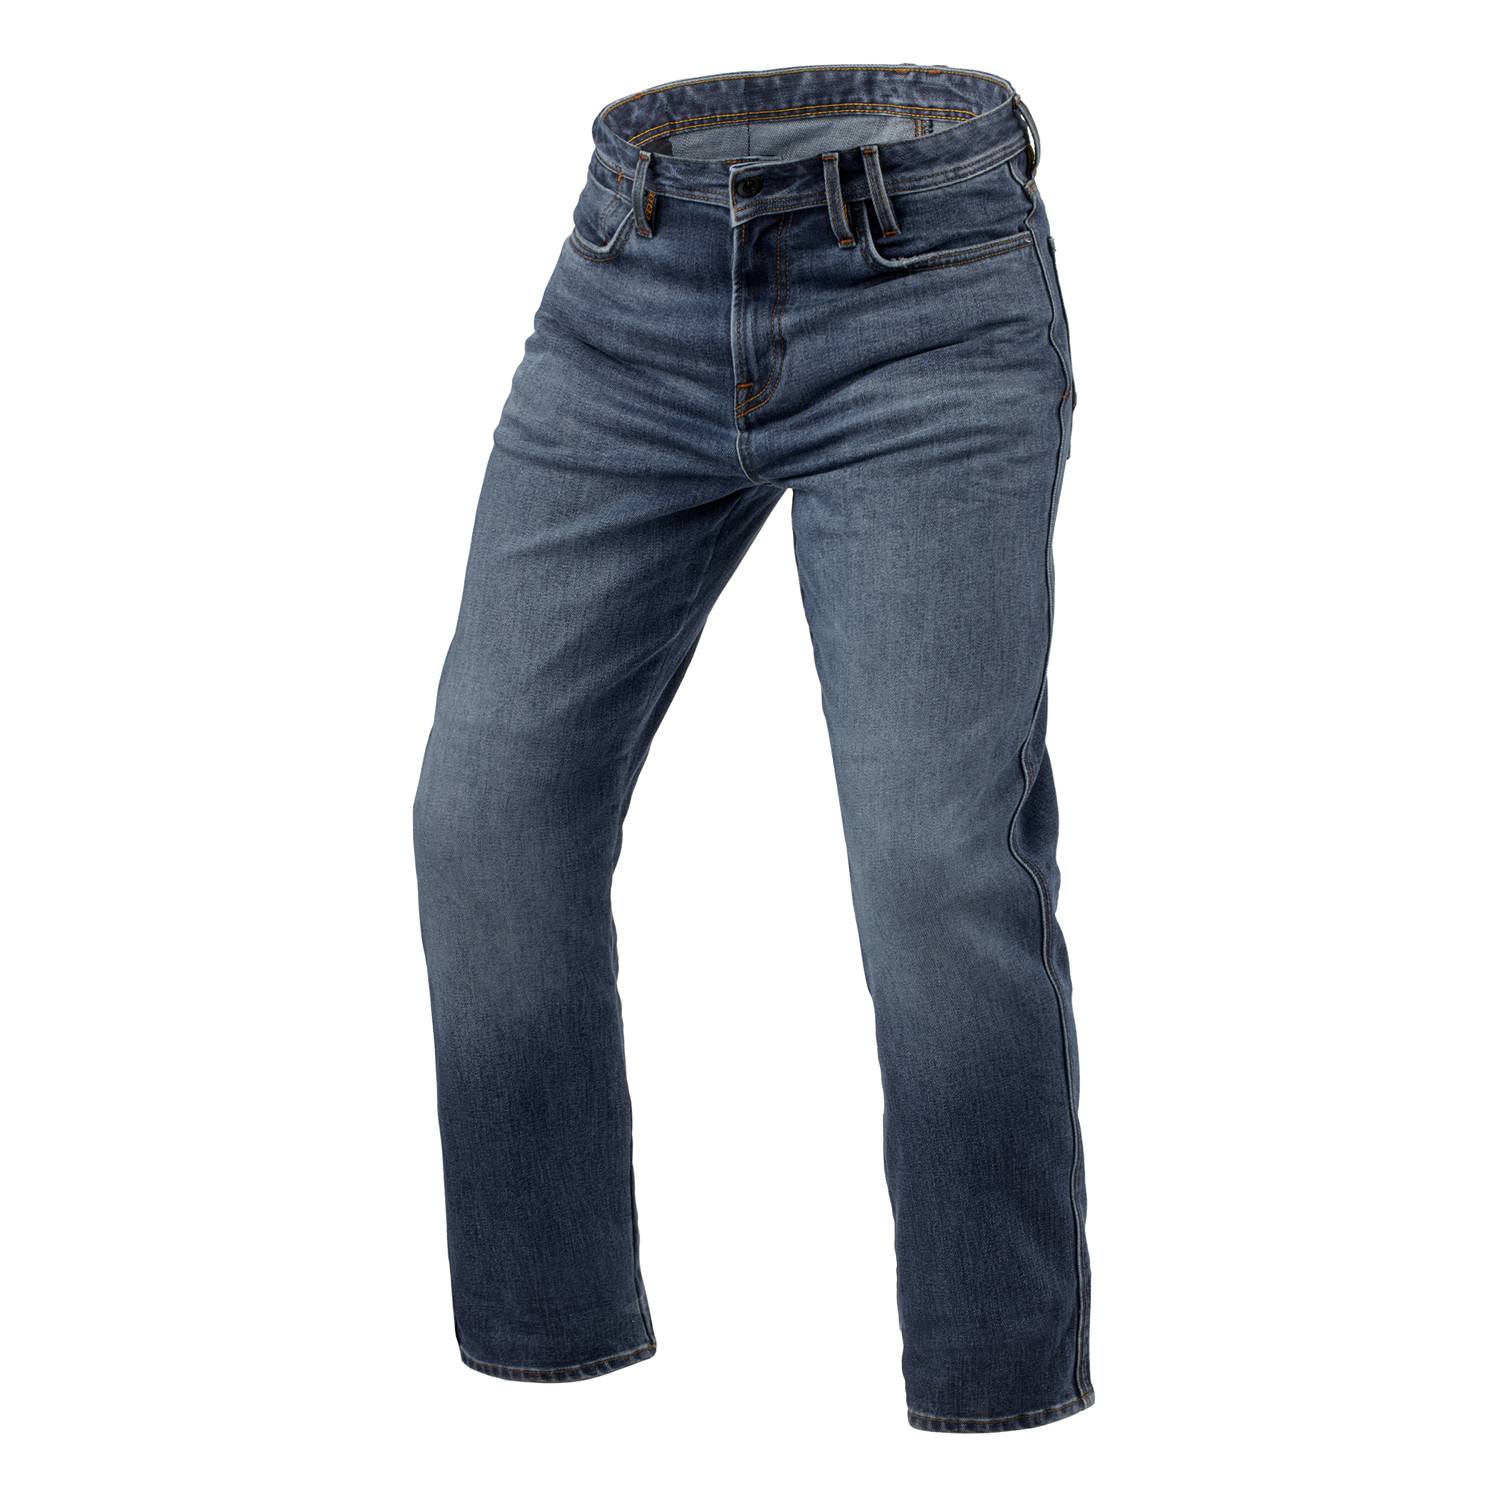 Image of REV'IT! Jeans Lombard 3 RF Medium Blue Stone L36 Motorcycle Jeans Talla L36/W31